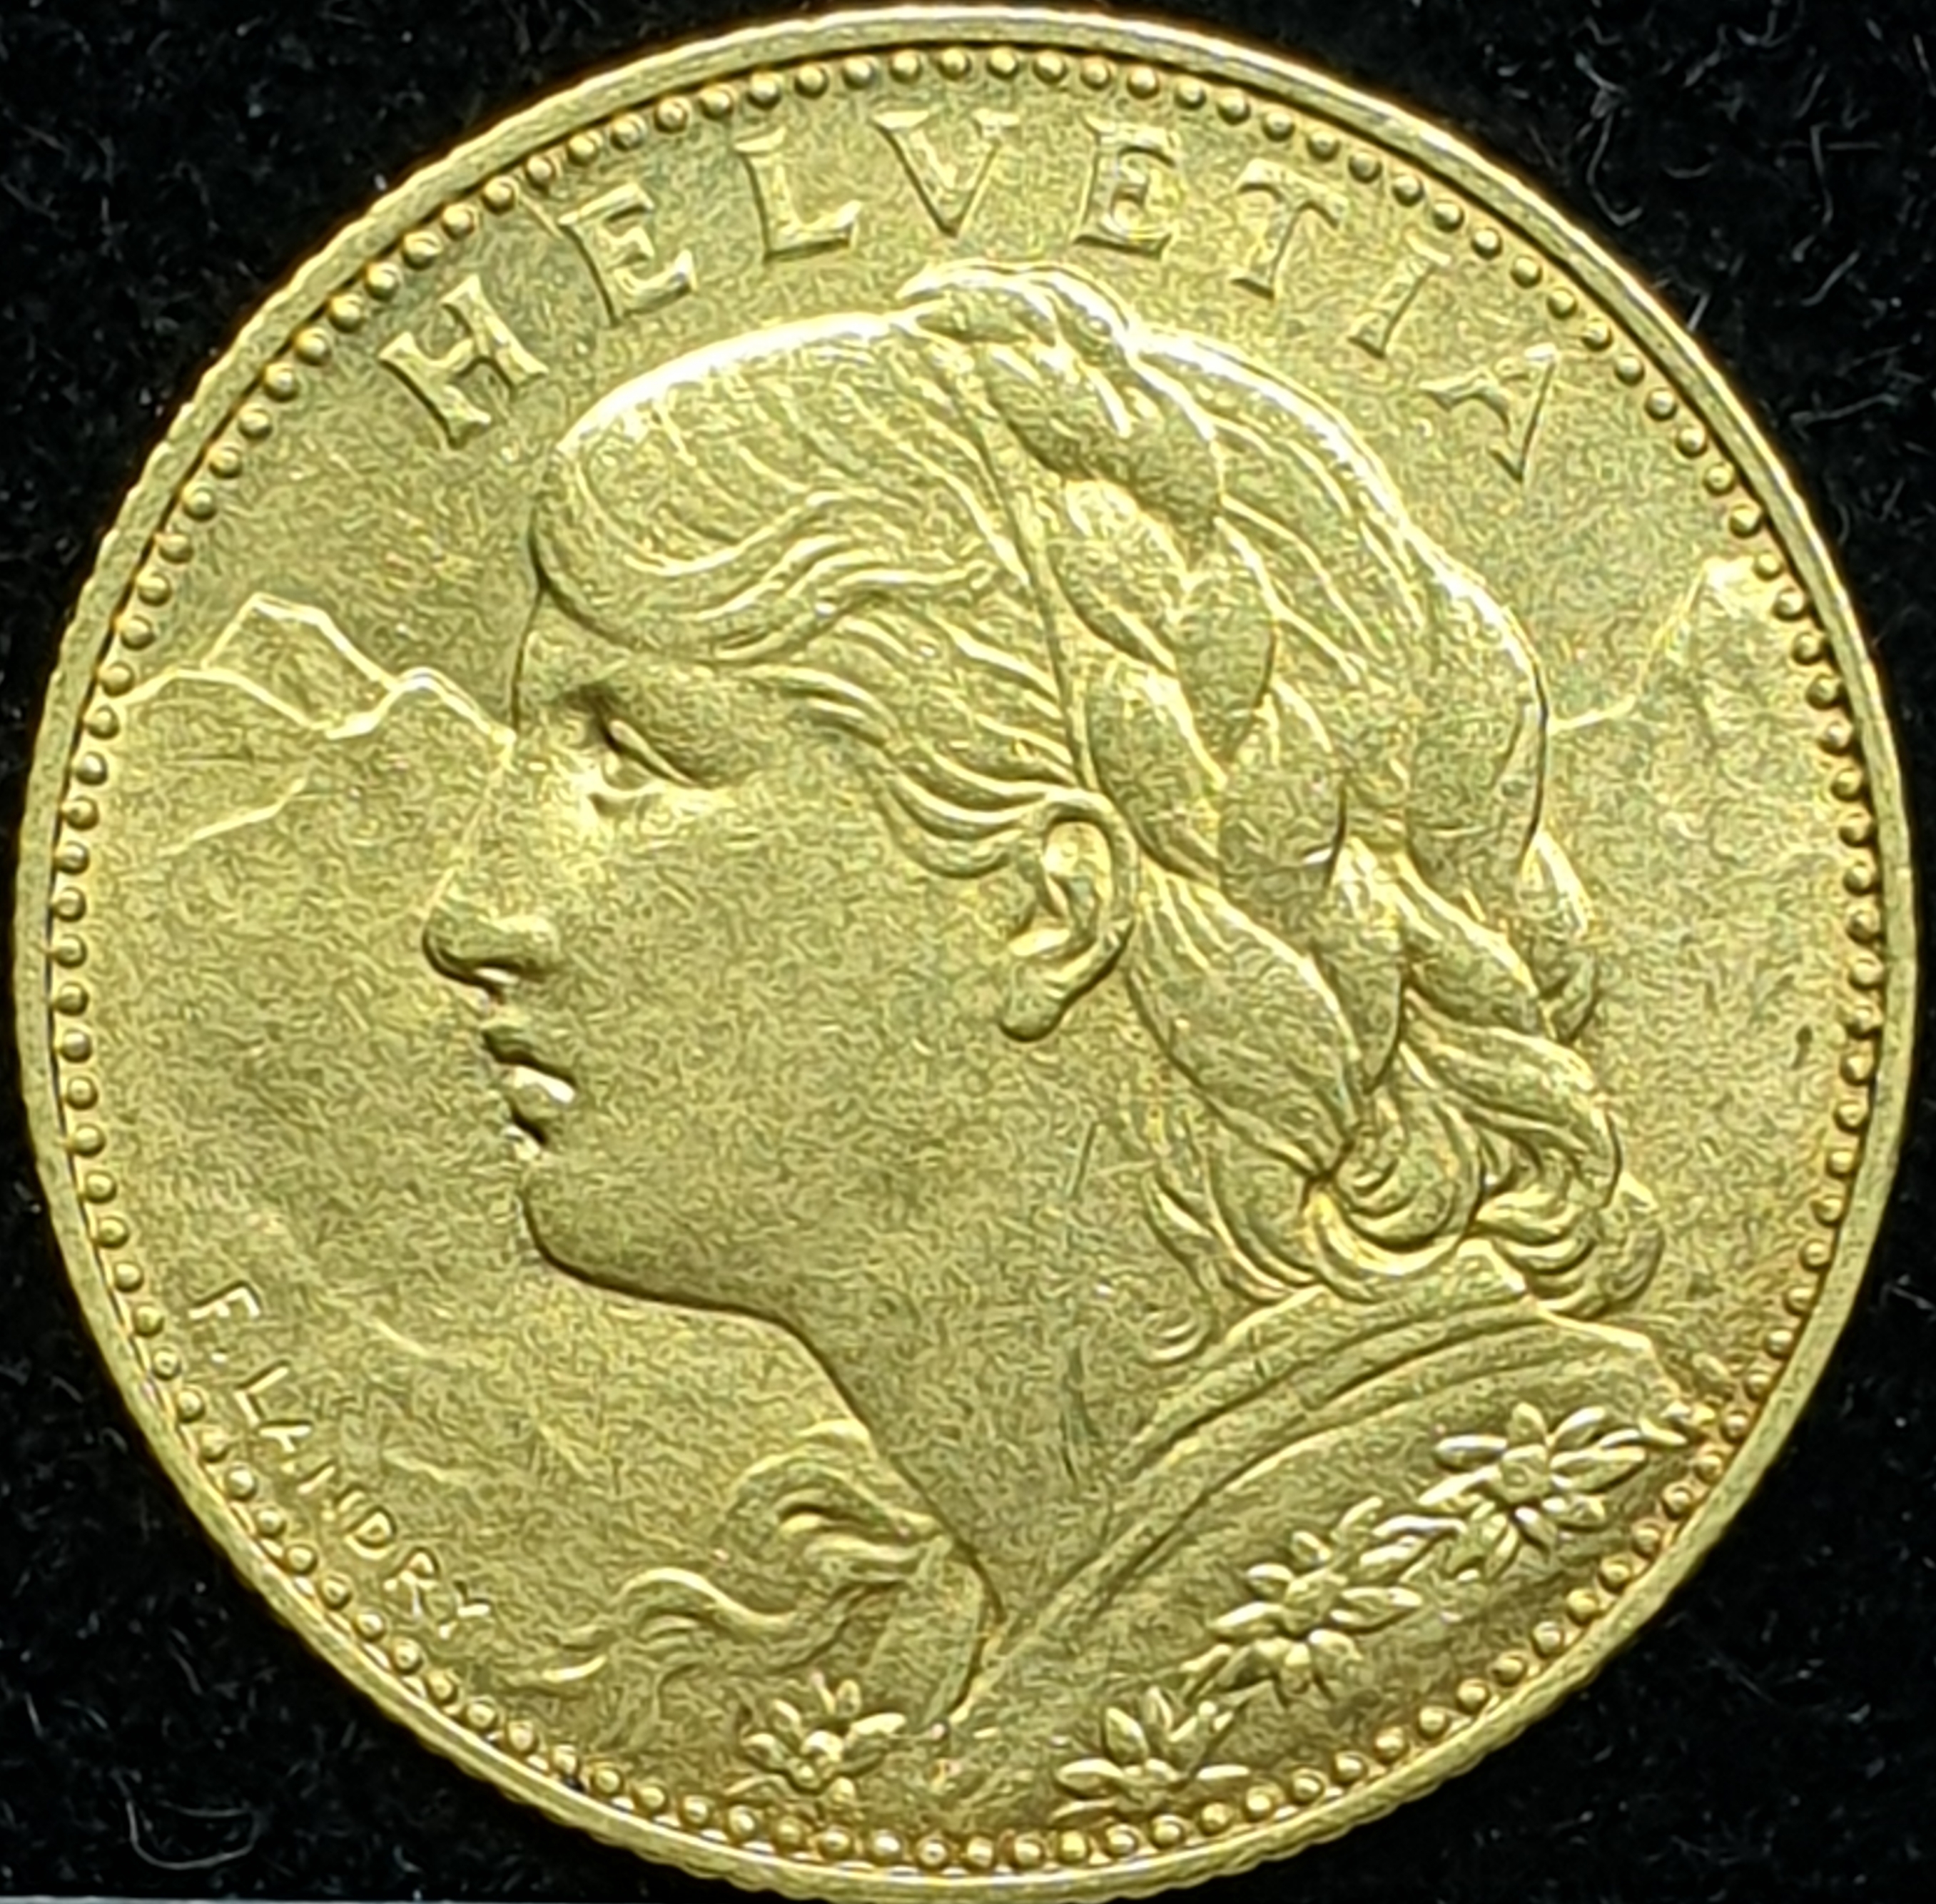 Switzerland - 10 francs - 1915 